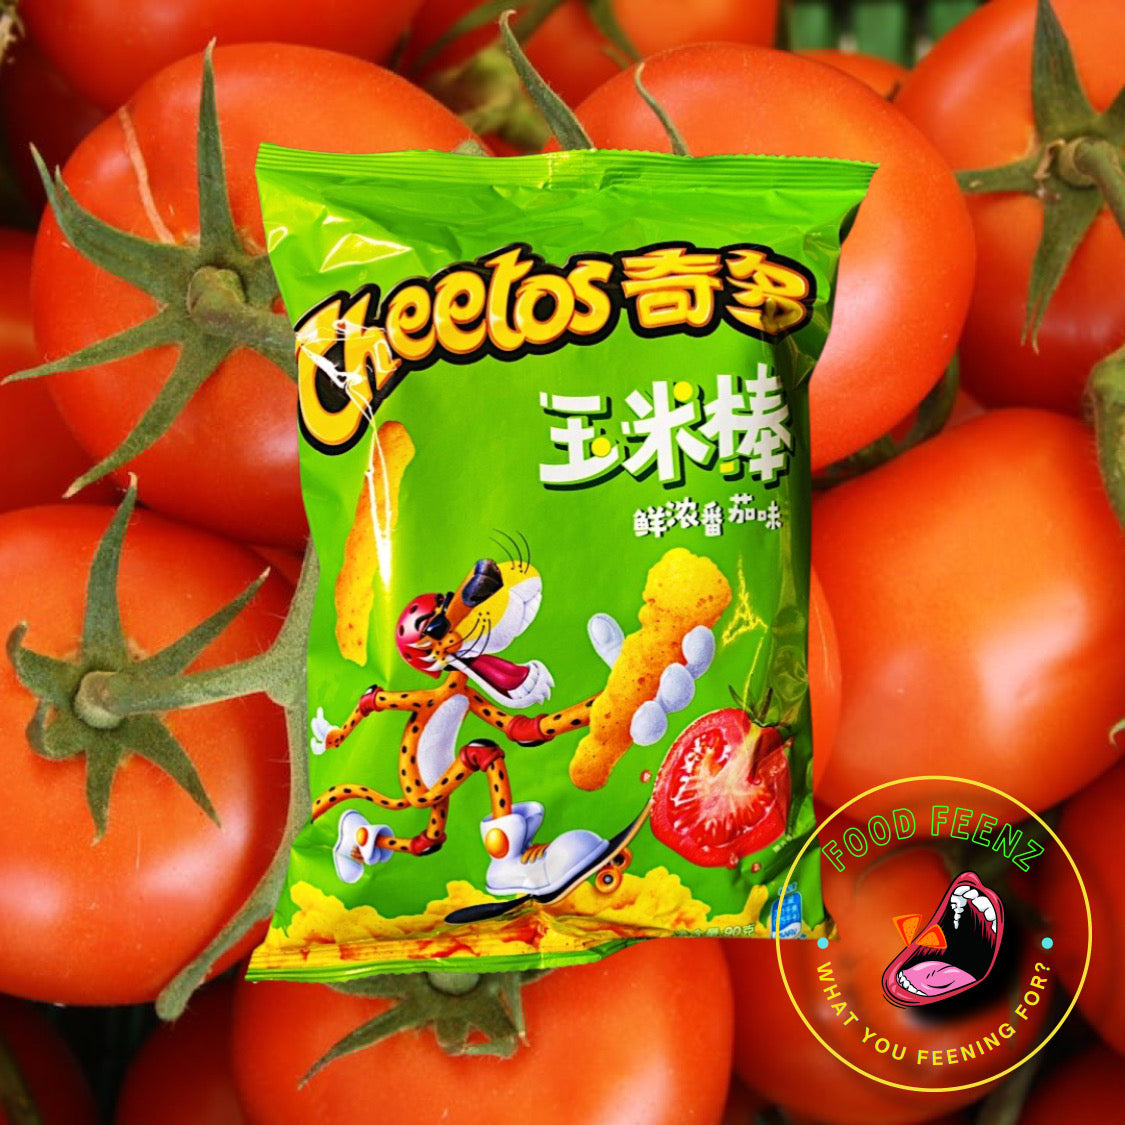 Cheetos Corn On The Cob Fresh Tomato Flavor (China)